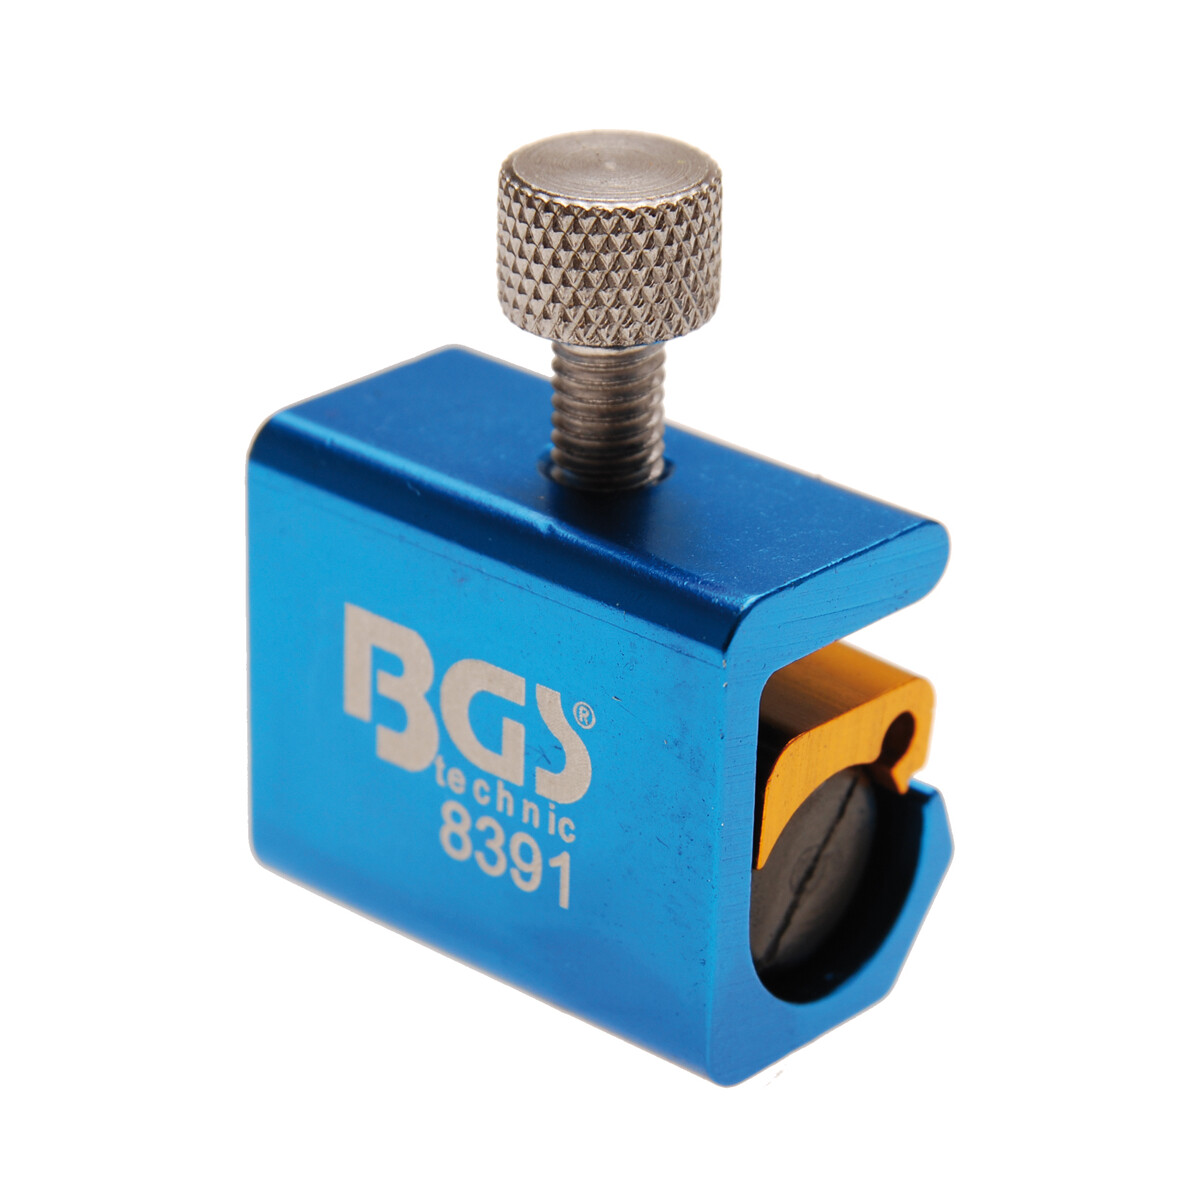 BGS Bowdenzugöler (BGS 8391)